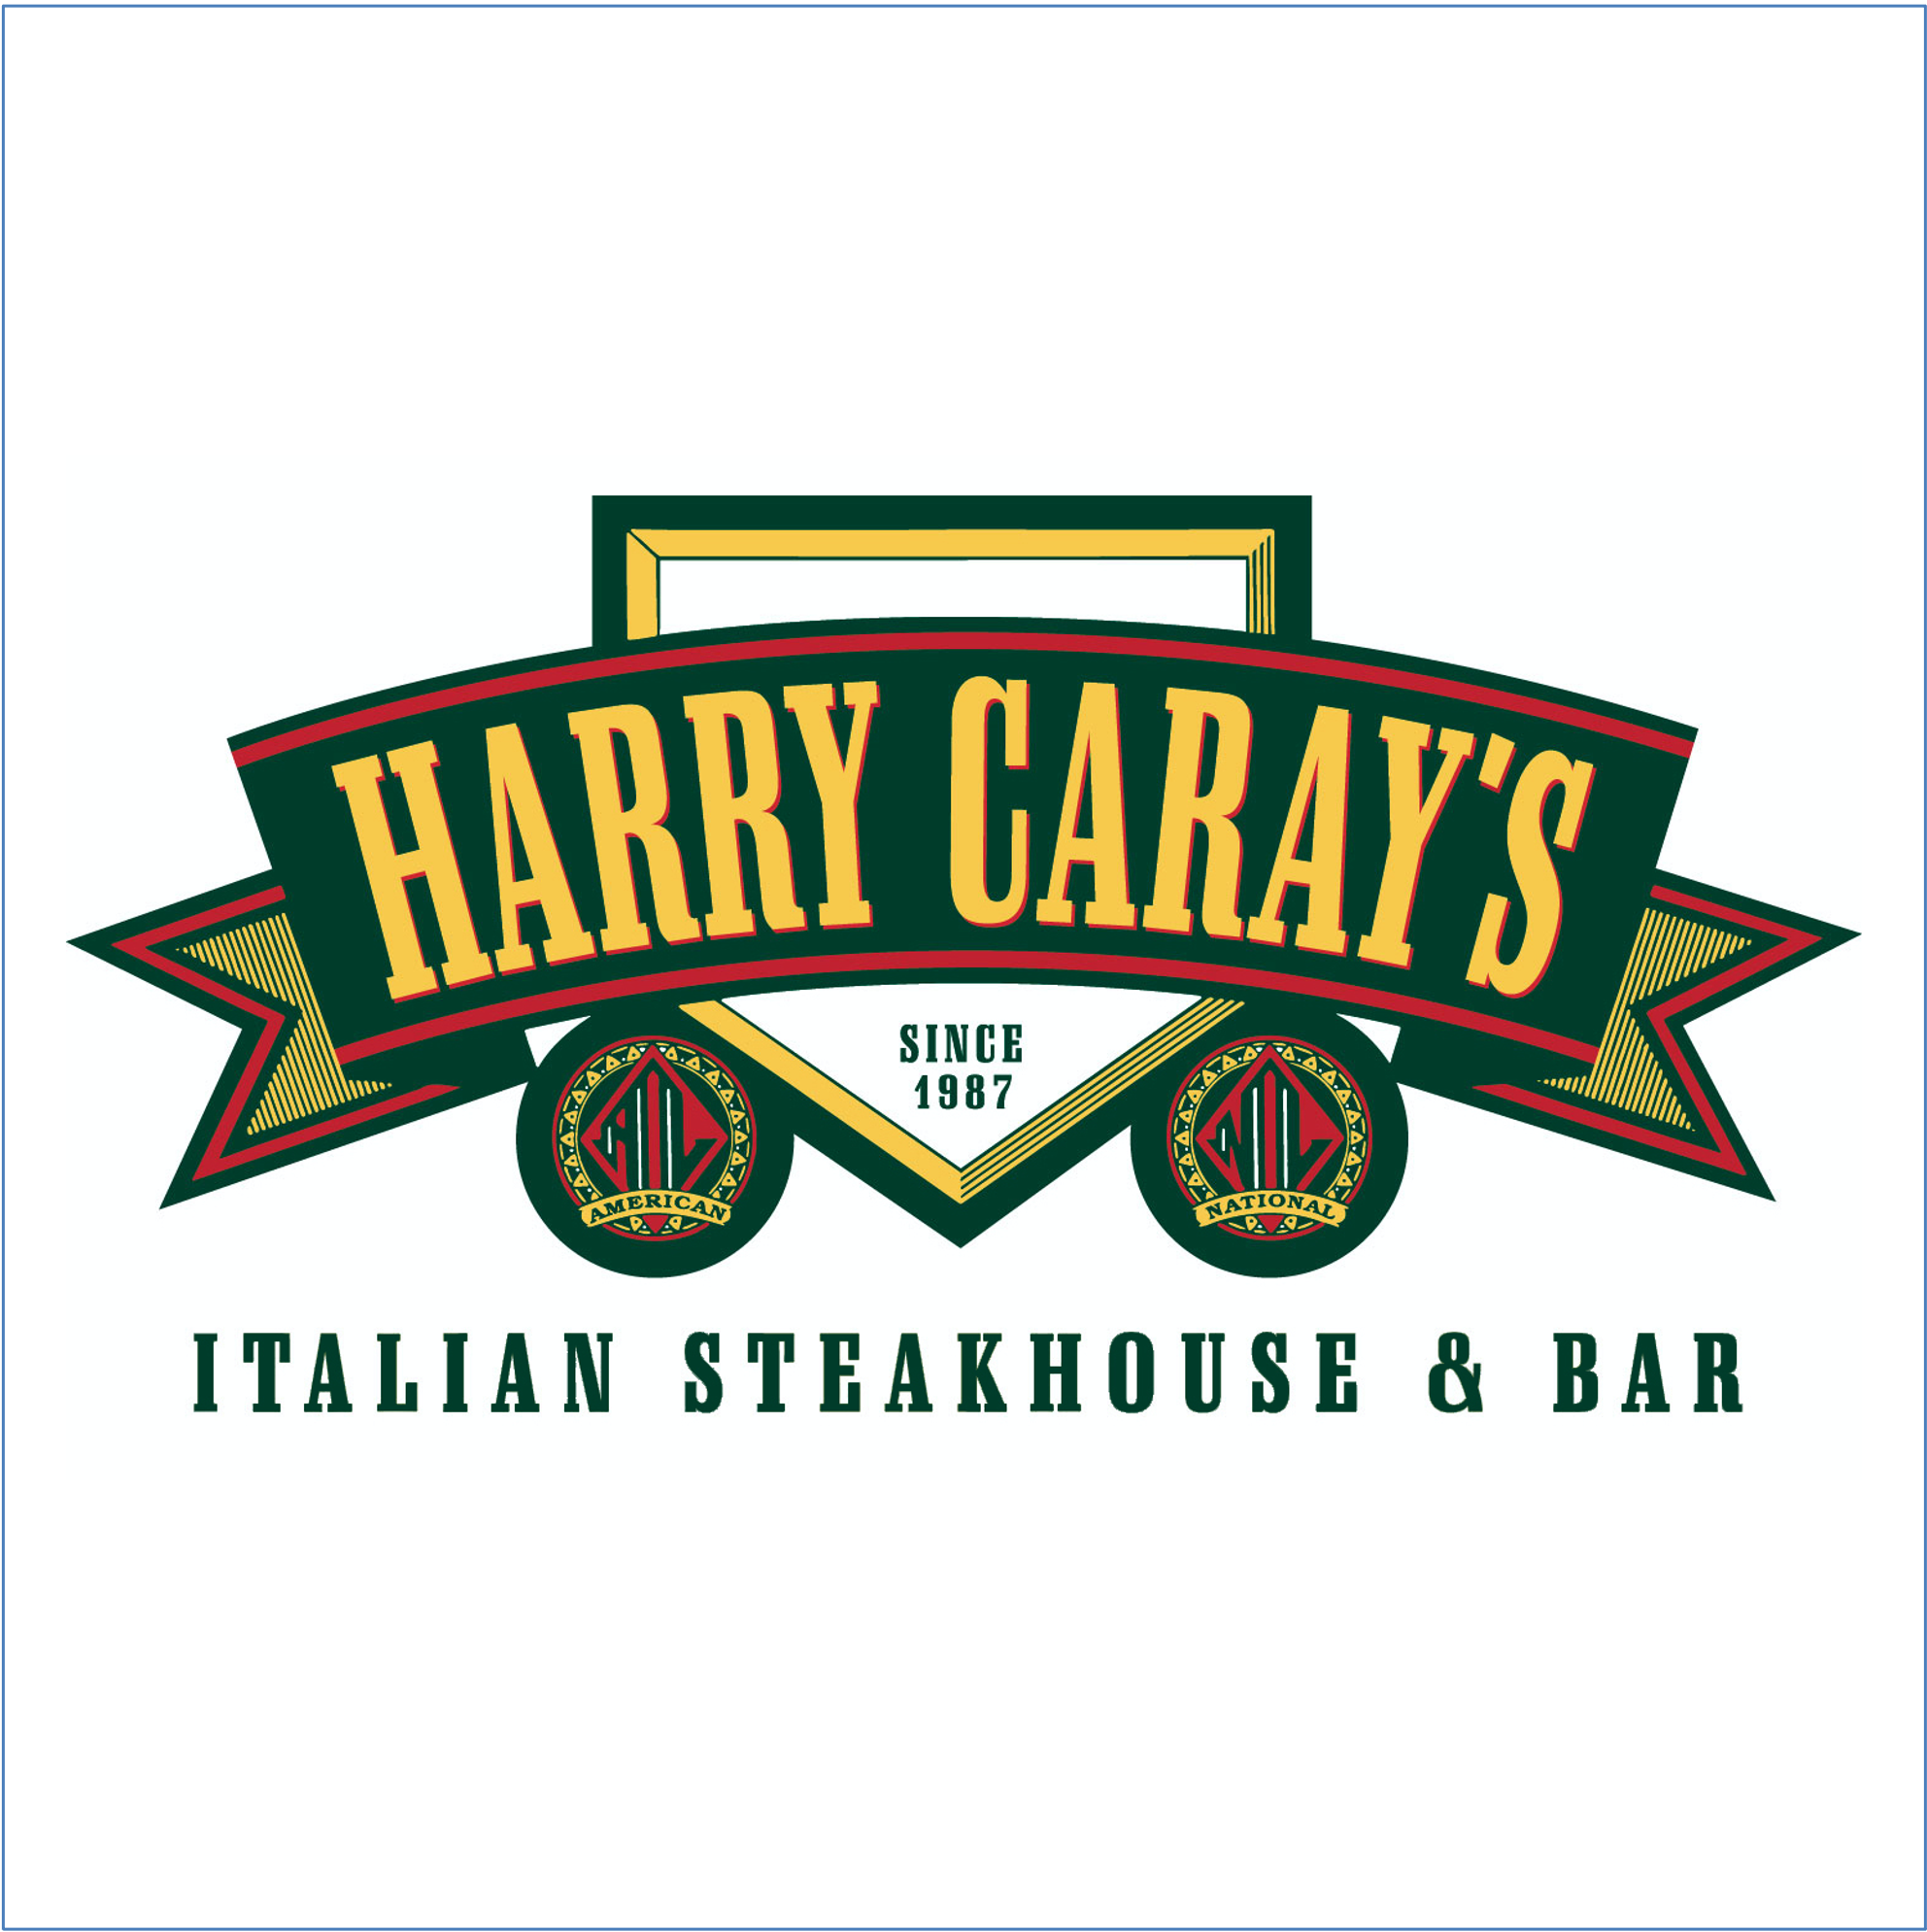 Harry Caray's Italian Steakhouse